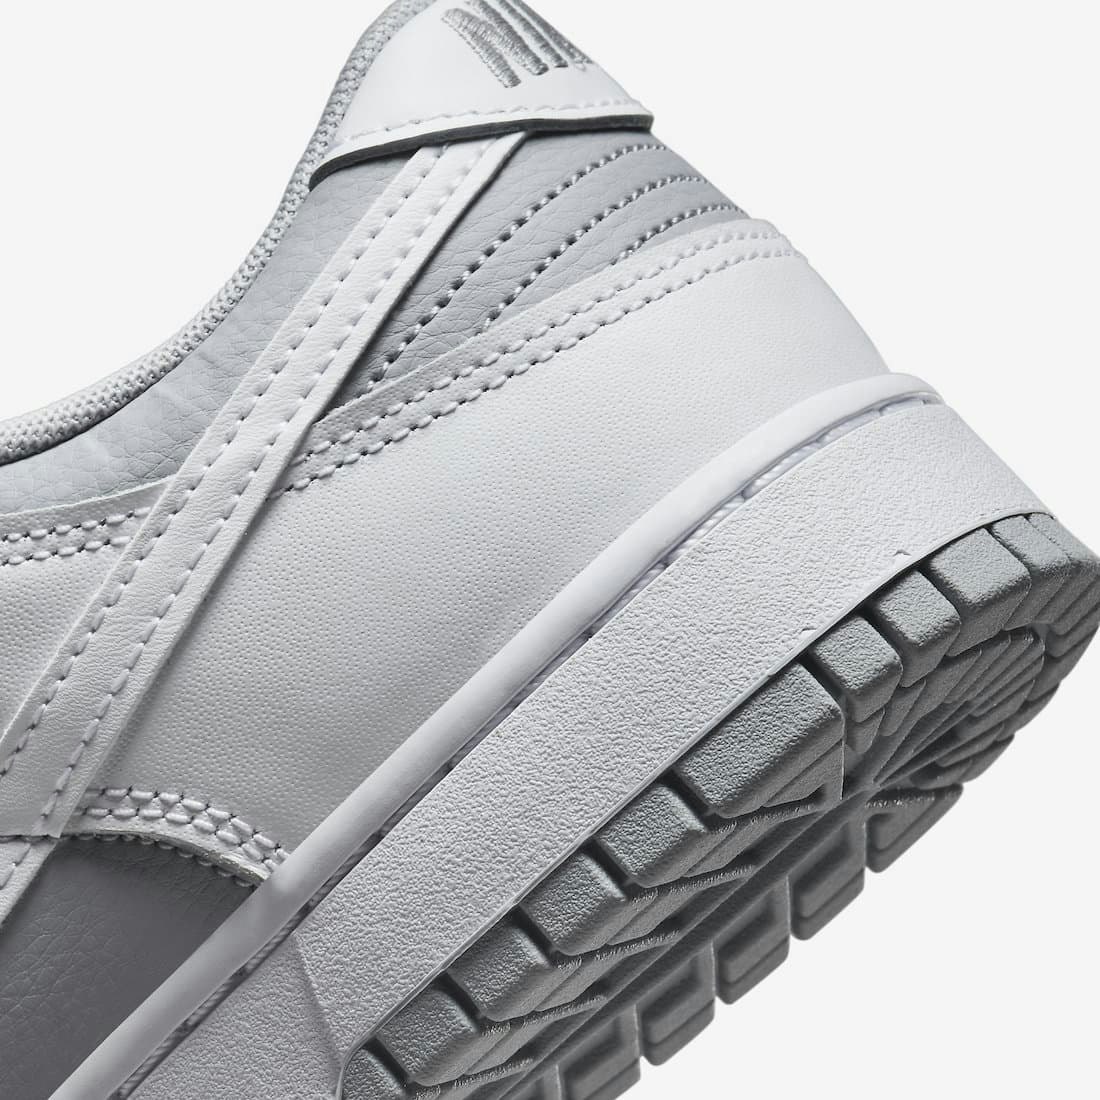 Nike Dunk Low "Wolf Grey"